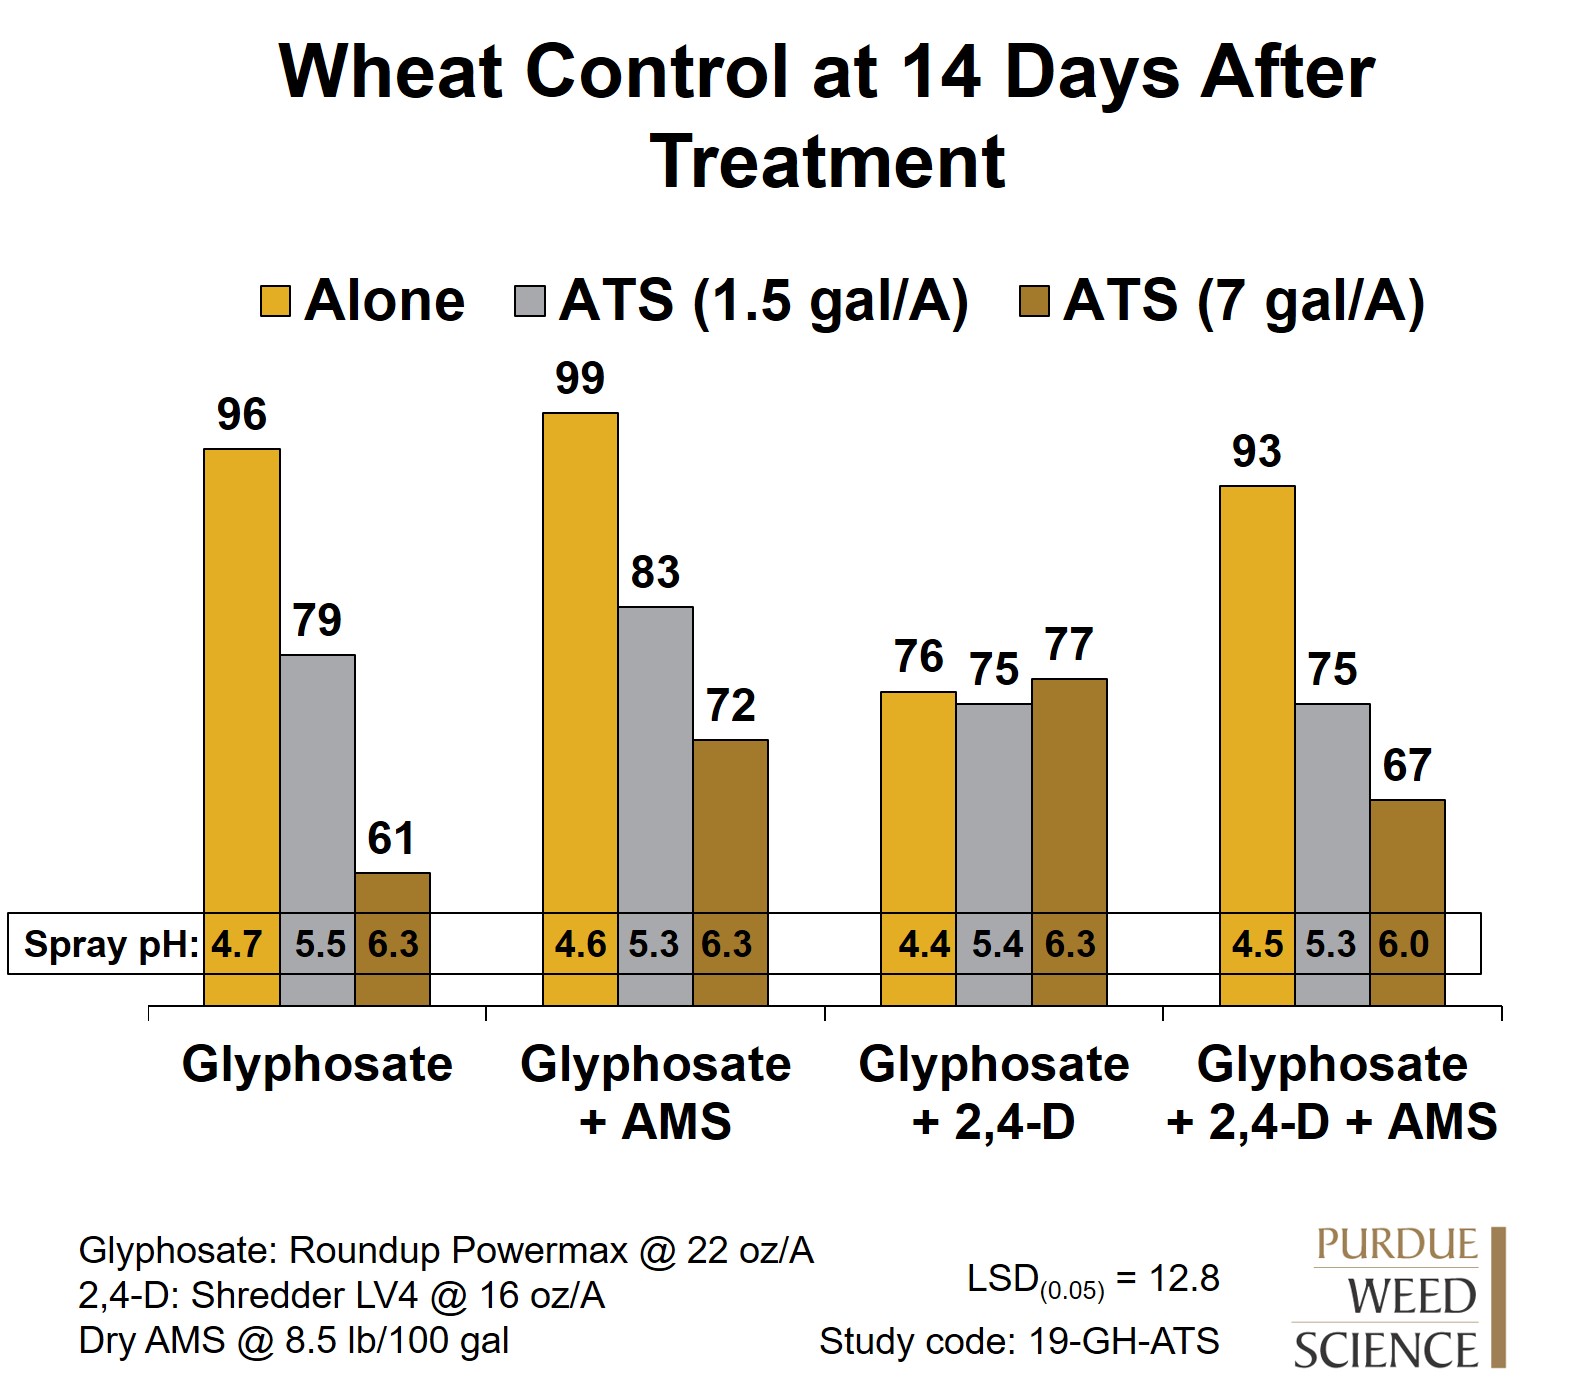 Figure 1. Effect of ammonium thiosulfate (ATS) on glyphosate activity on wheat 14 days after treatment.